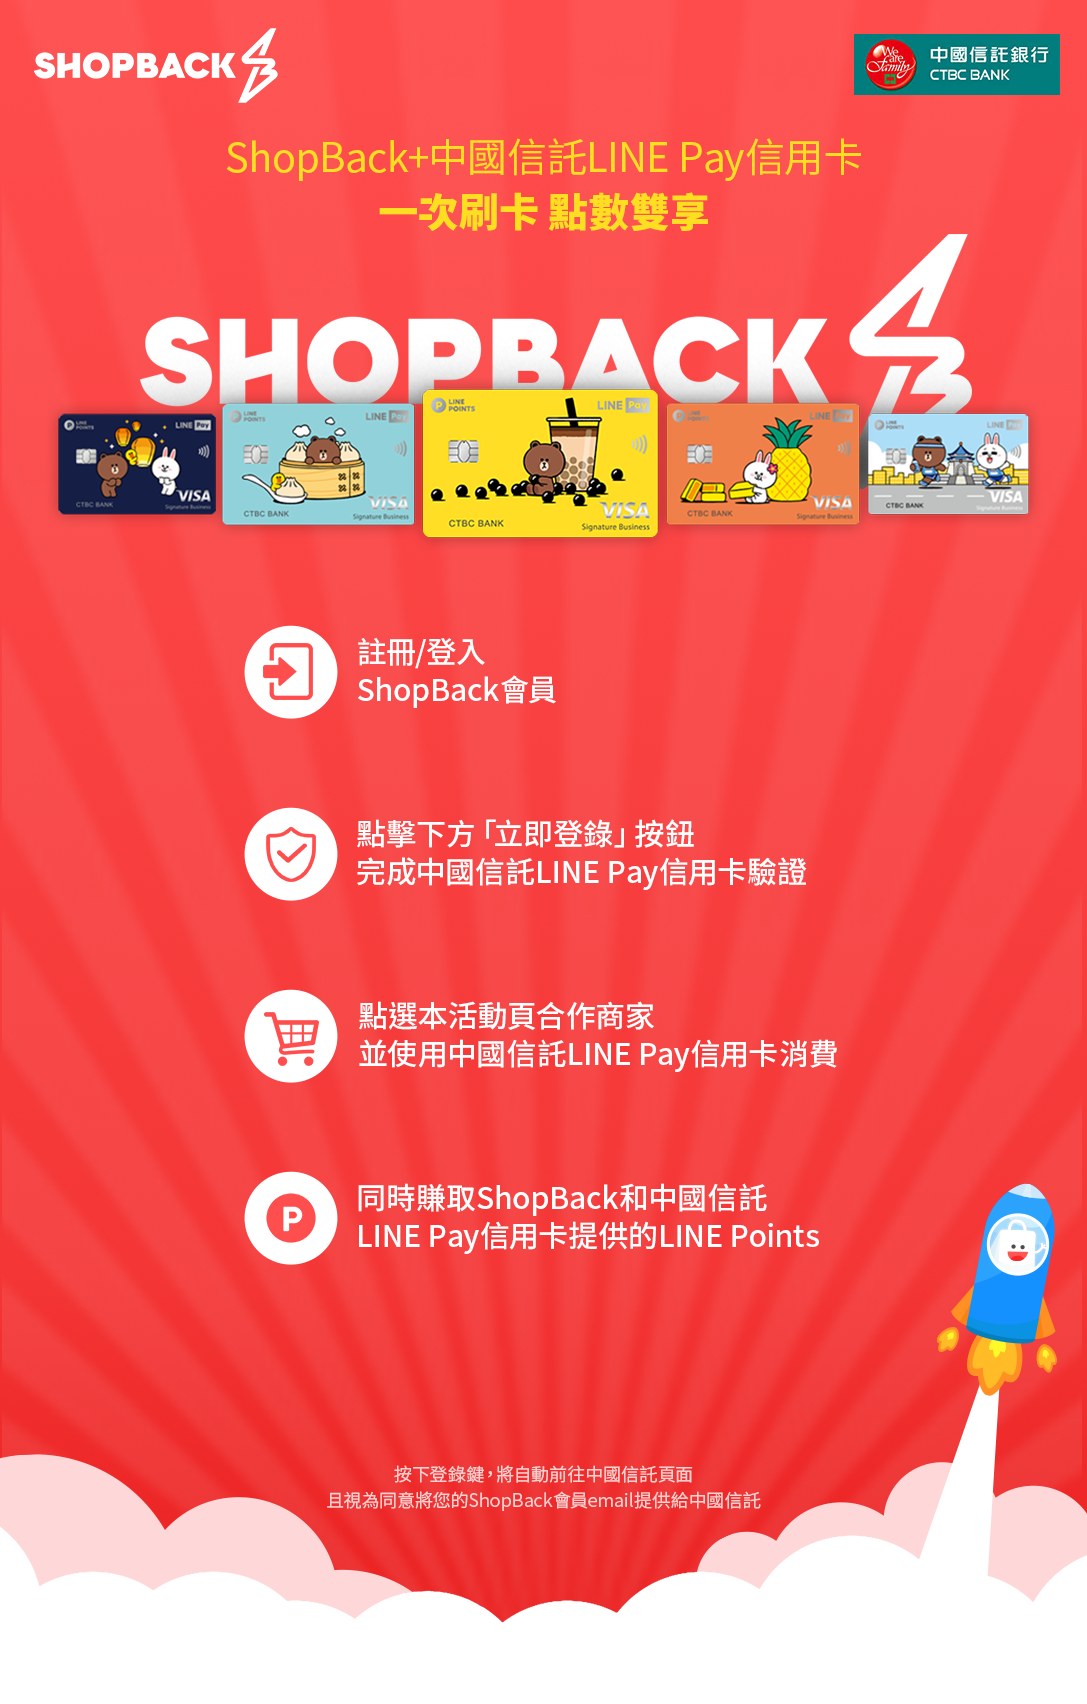 CTBC Shopback - Introduction banner